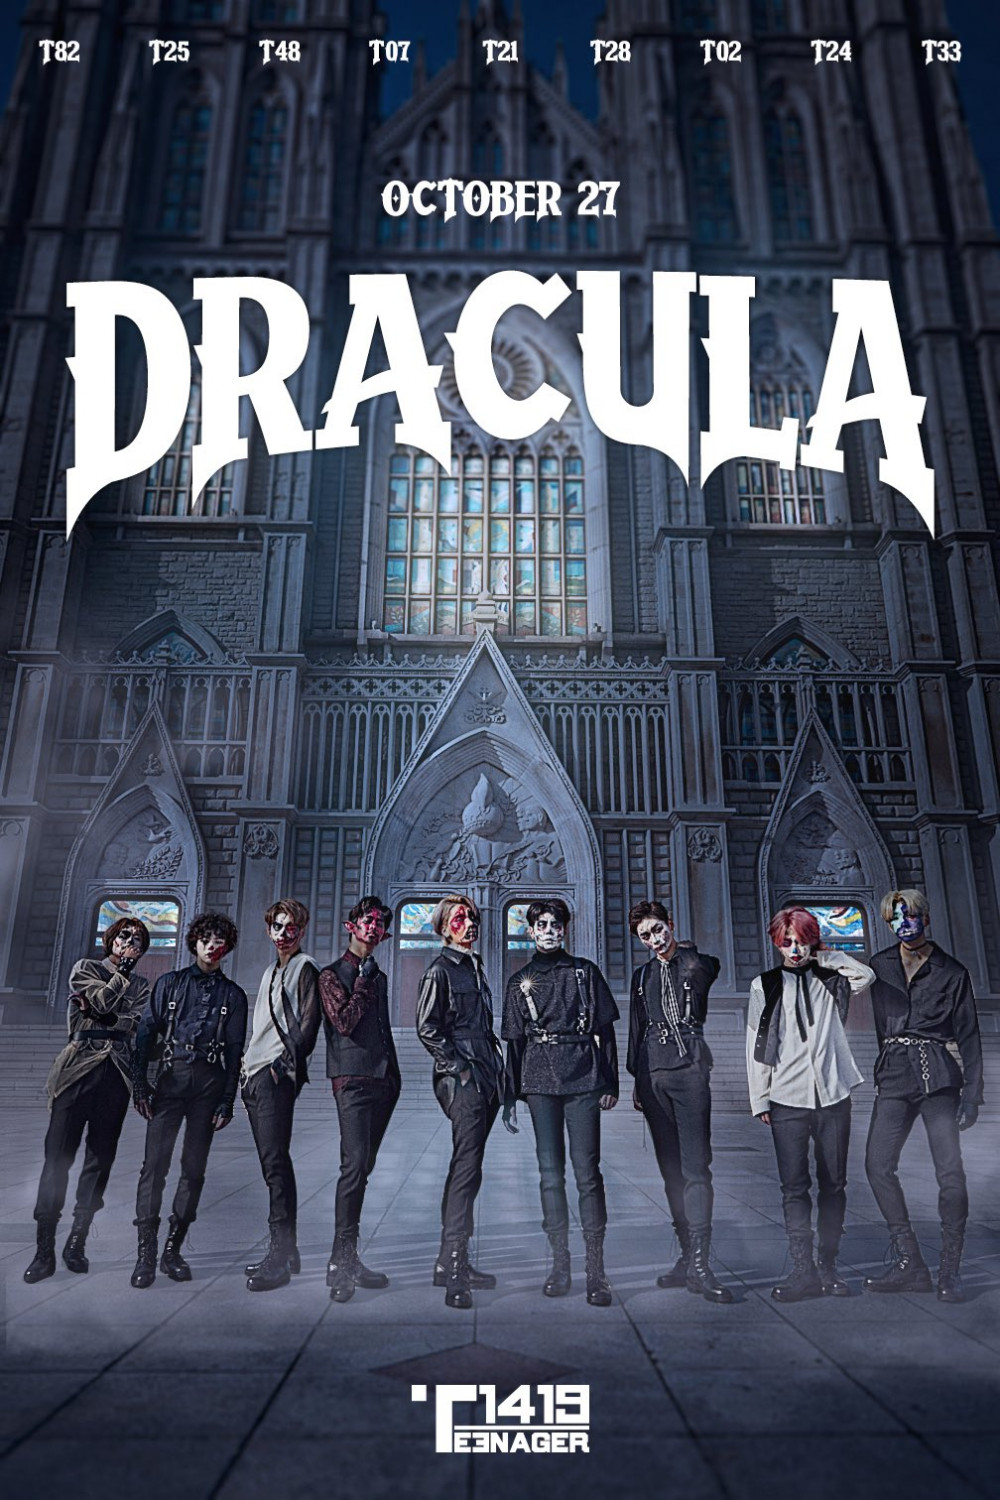 [Дебют] T1419 - "Dracula": тизер предстоящего шоу "Daily Us"